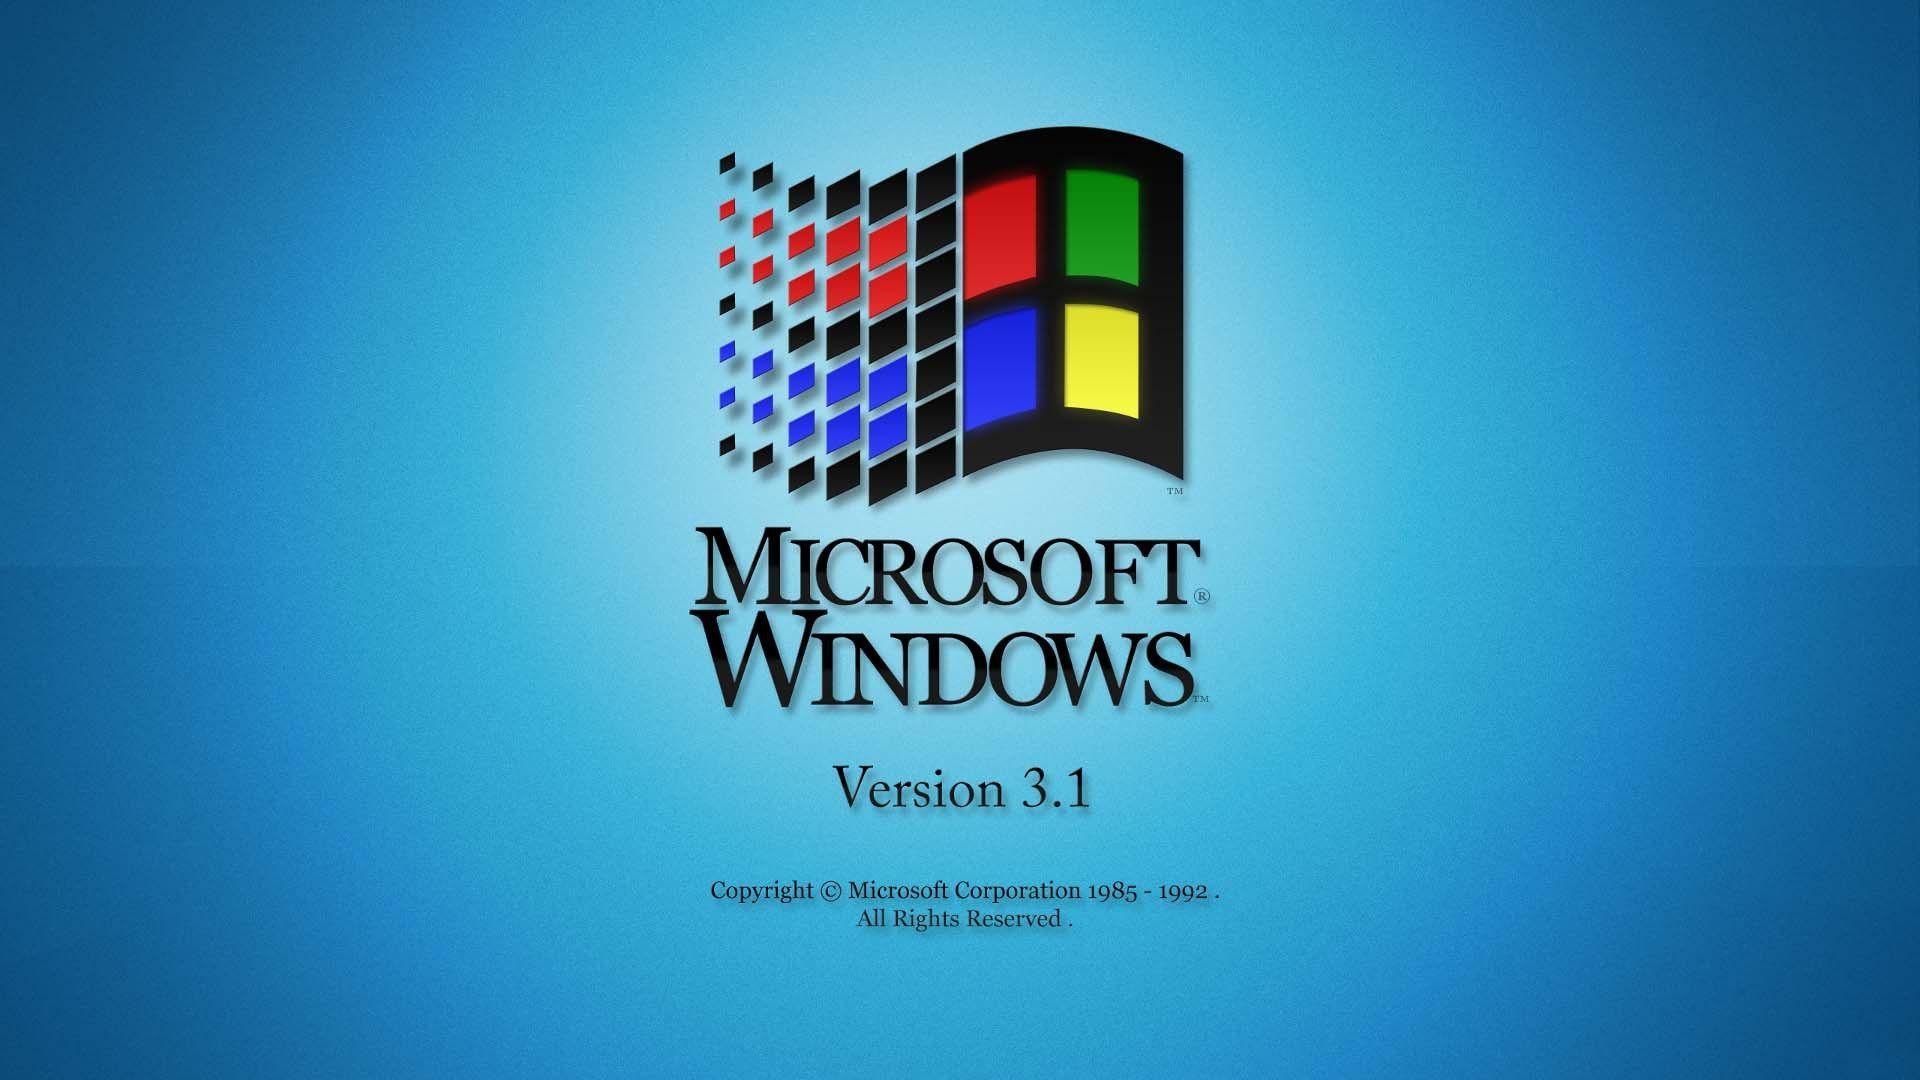 Windows 95 Wallpaper HD pertaining to Windows 95 Wallpaper HD